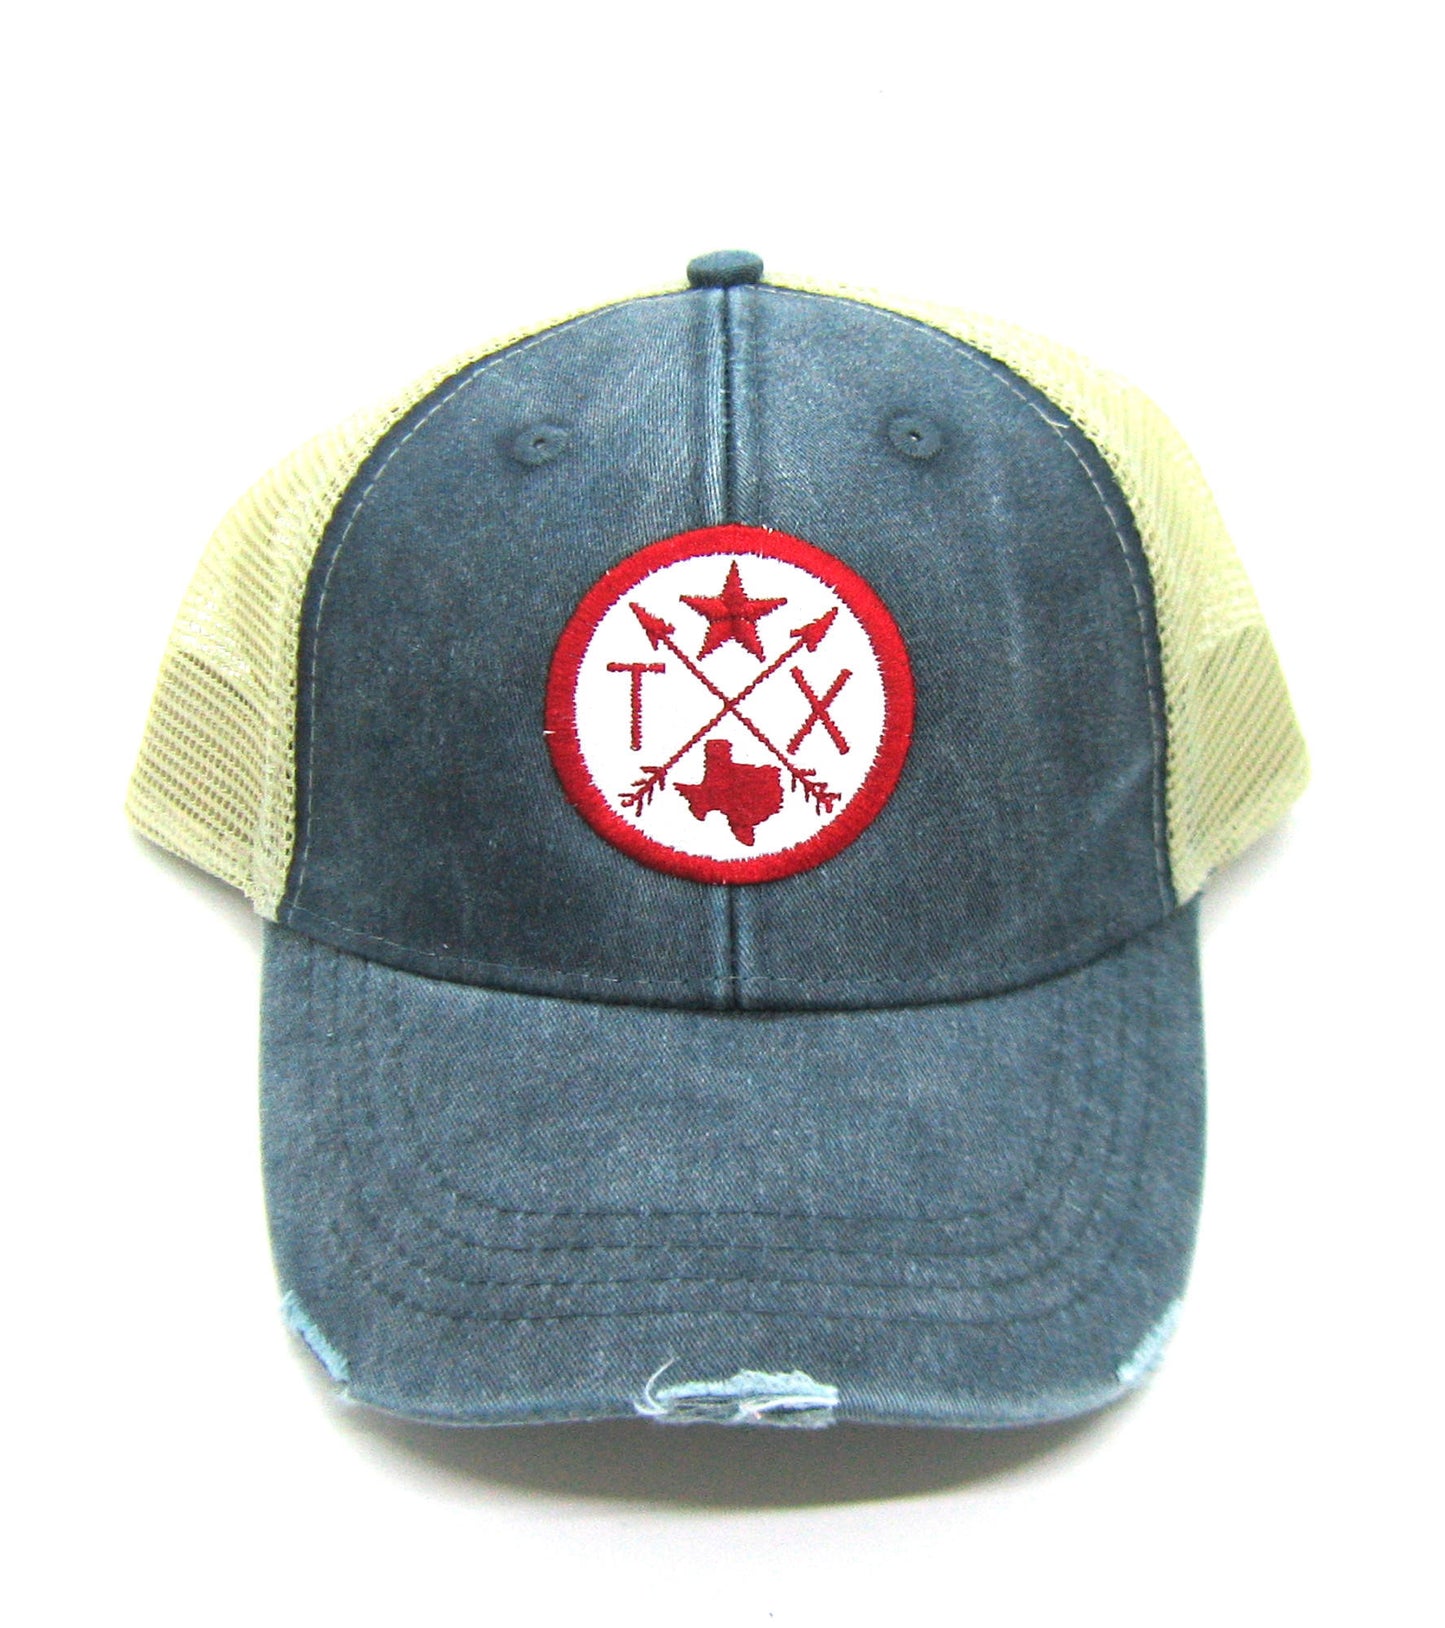 Texas Trucker Hat - Navy Blue Distressed Snapback Trucker Hat - Texas Star Arrow Compass Patch